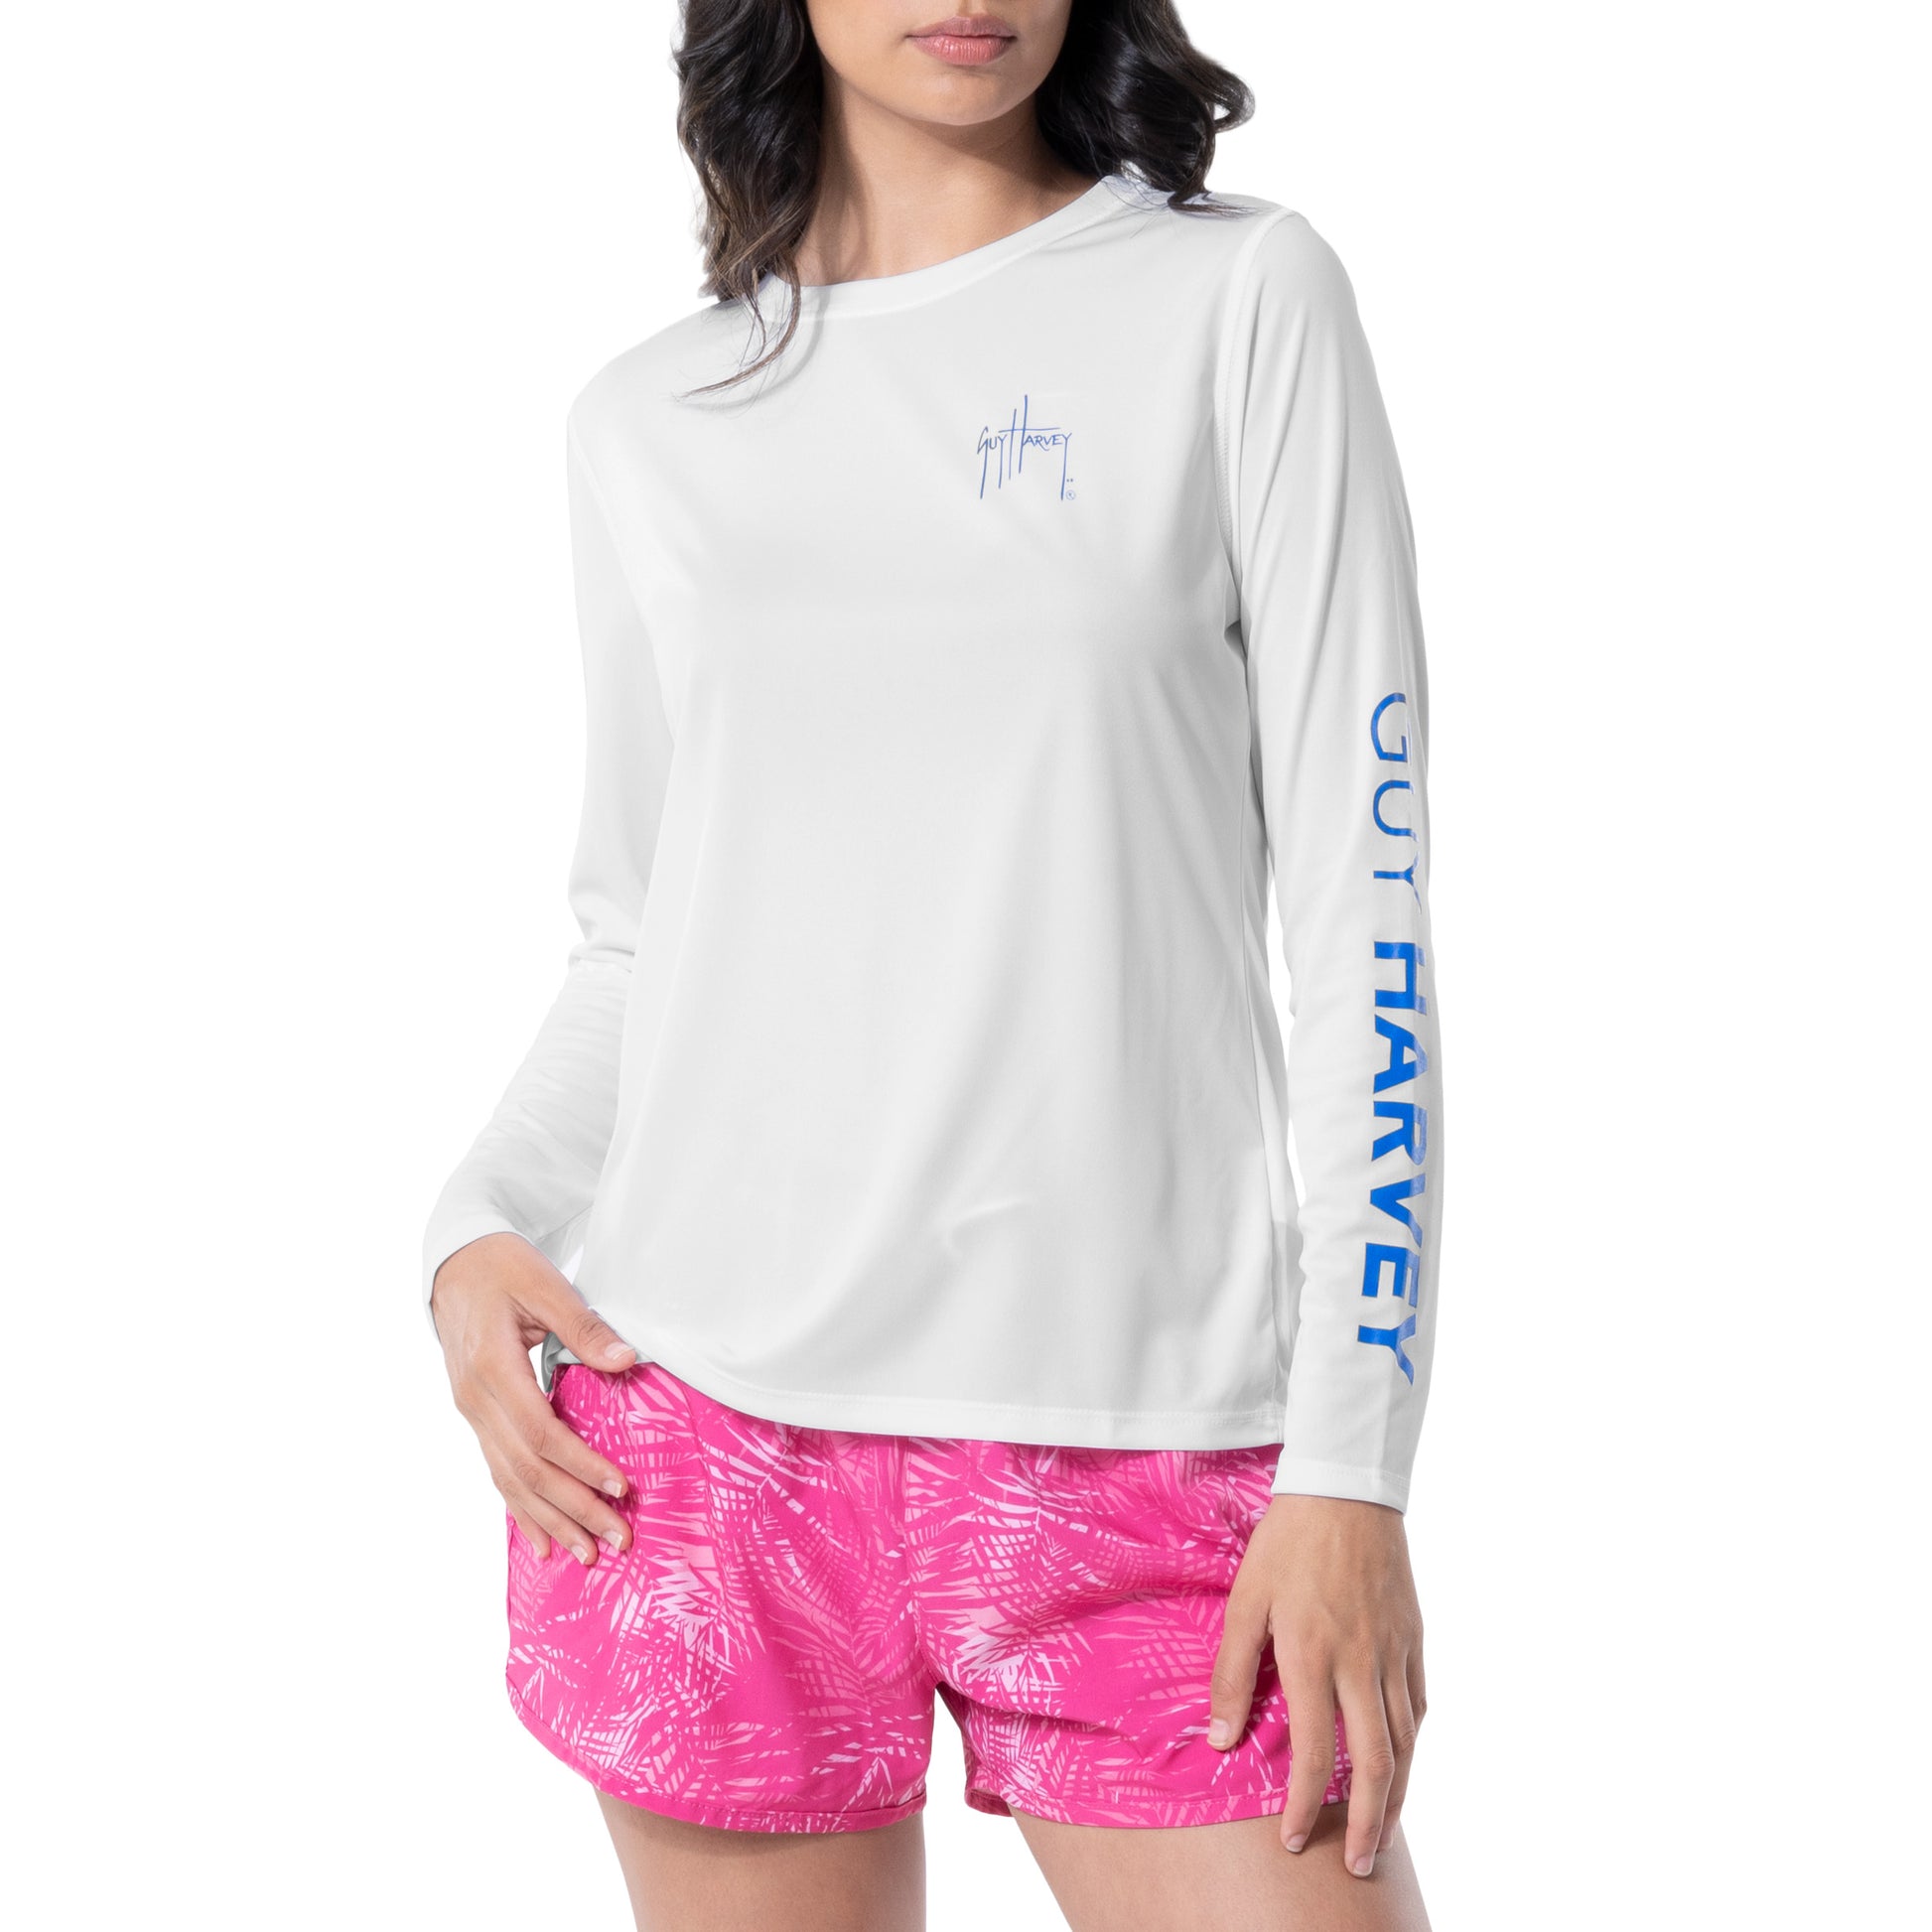 Ladies Long Sleeve Performance Fishing Sun Protection Shirt UPF 50+ View 32